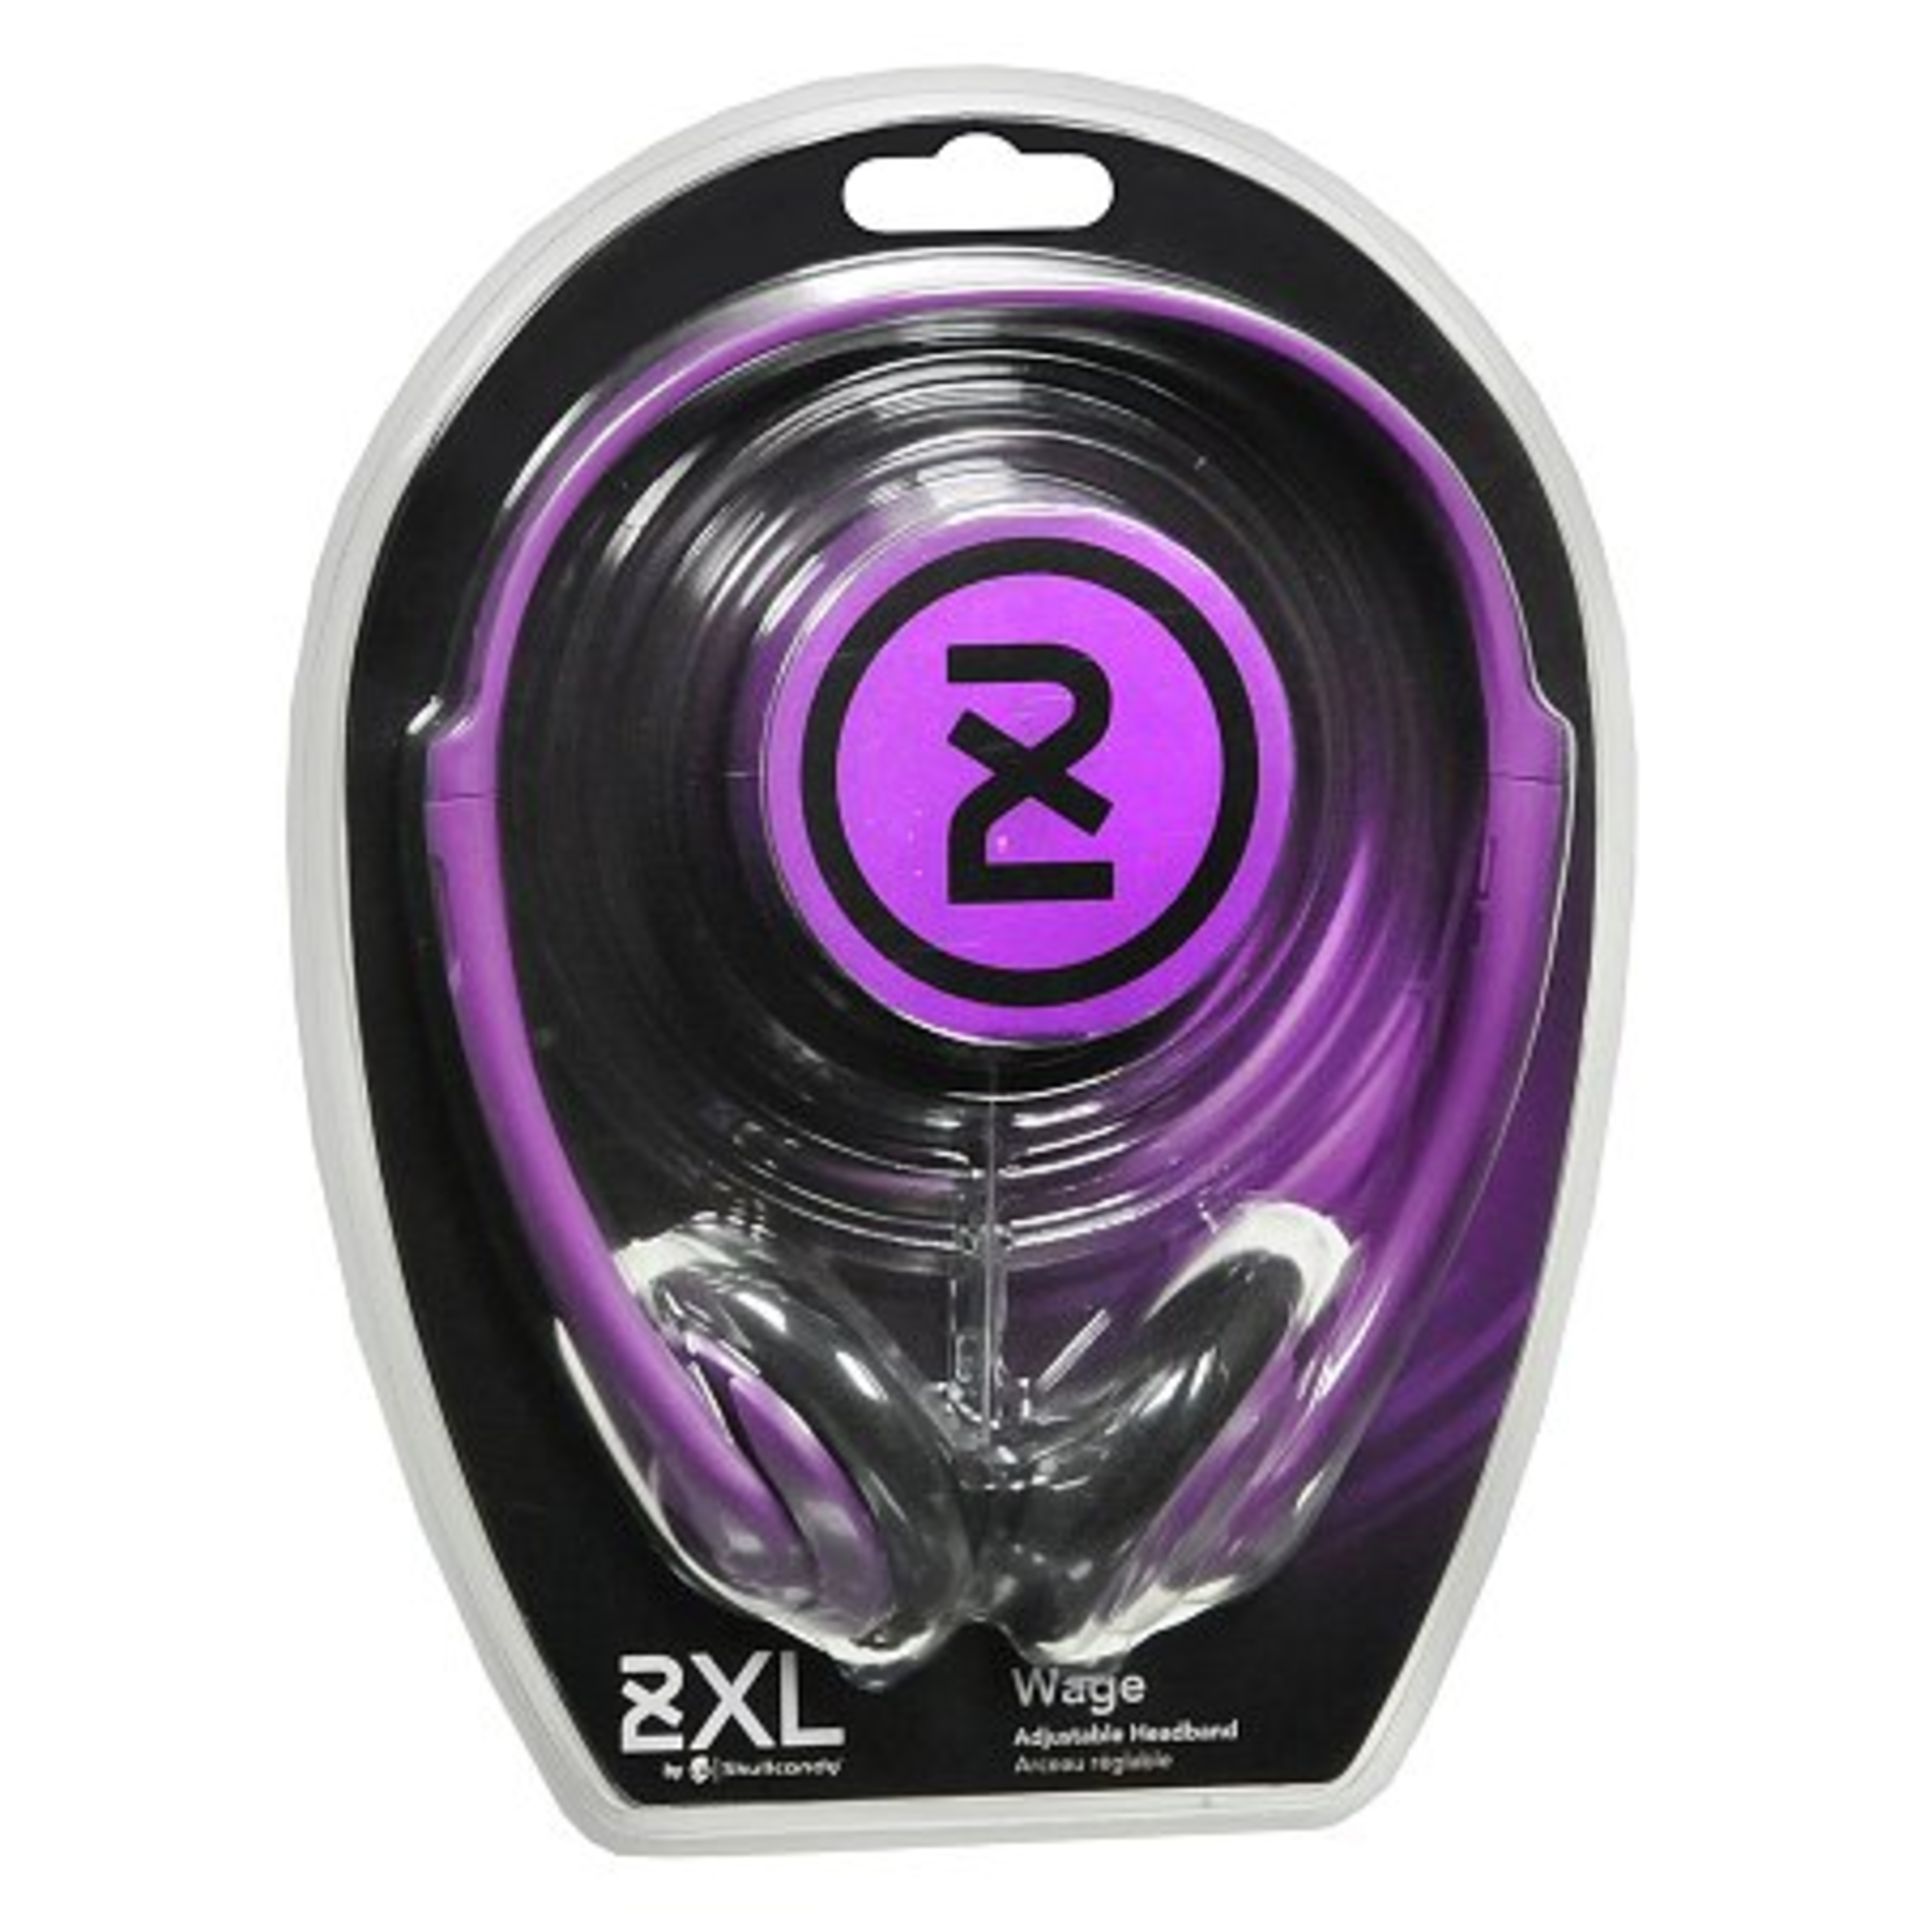 V *TRADE QTY* Brand New Skullcandy 2XL Wage Purple Headphones With Adjustable Headband X 4 YOUR